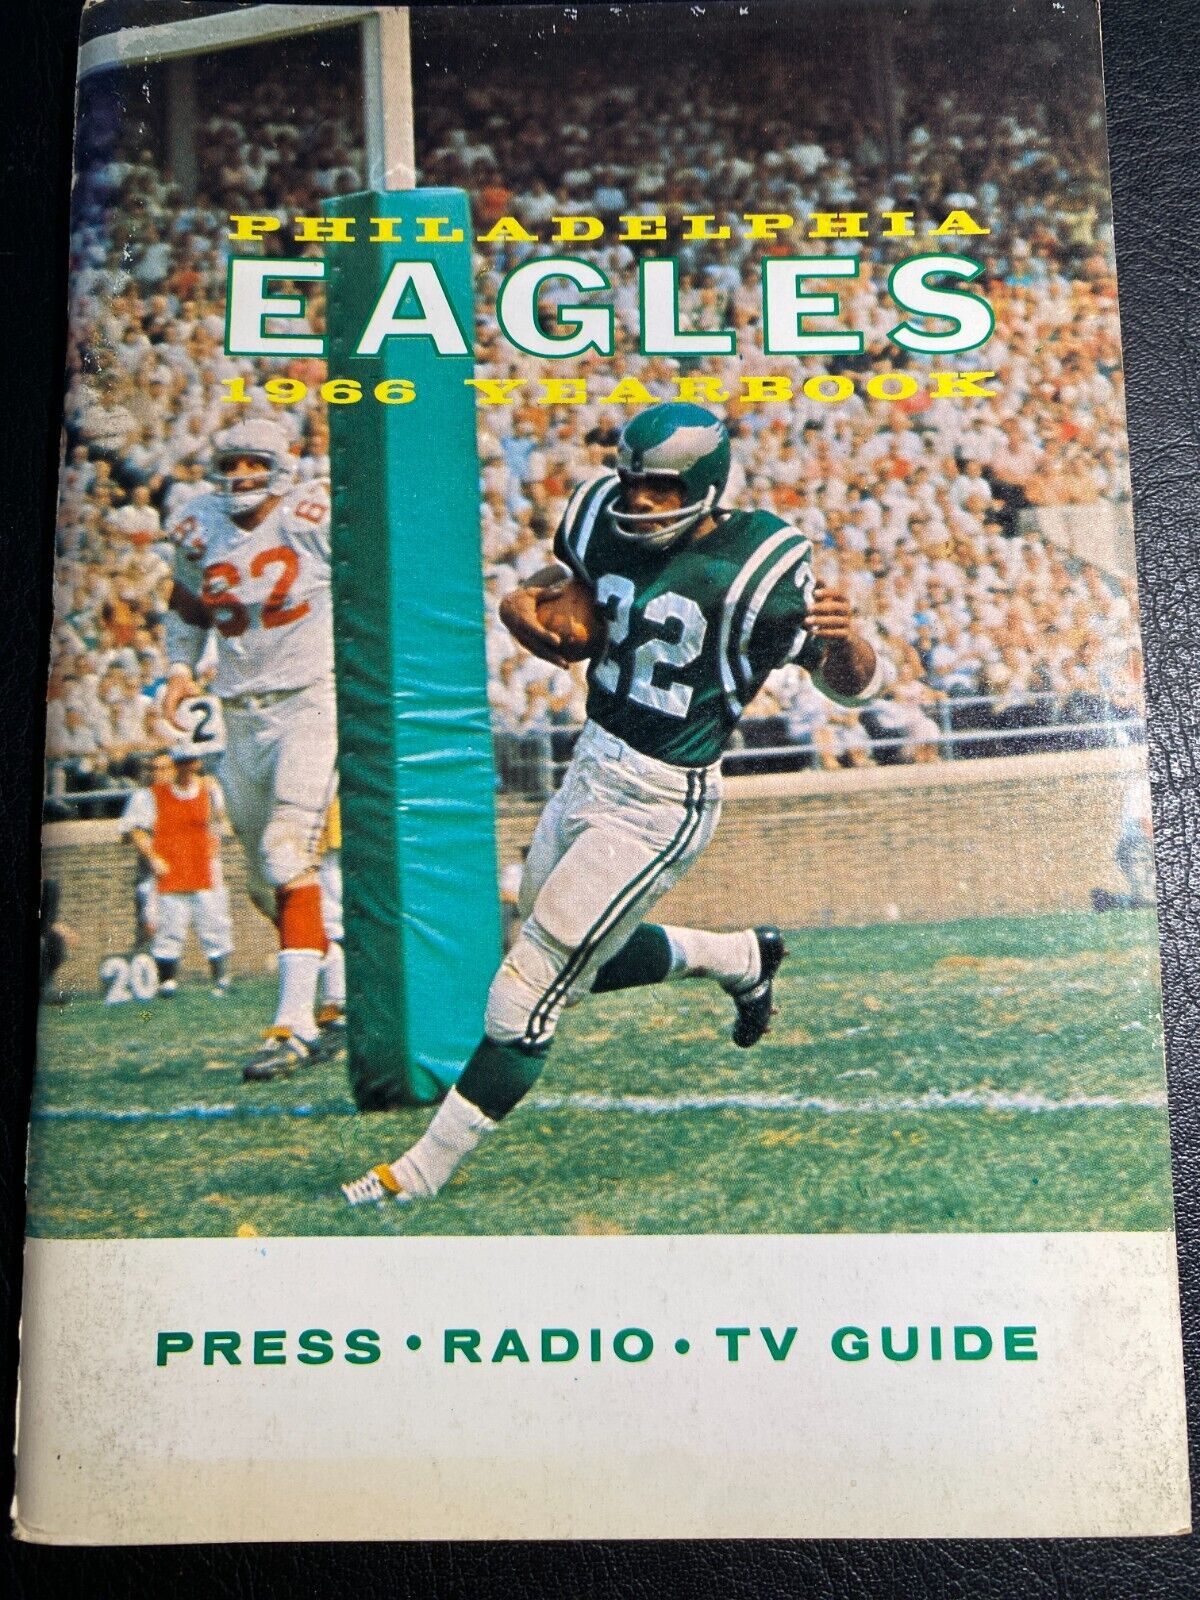 1966 Philadelphia Eagles Yearbook Press Radio TV Guide NFL Football